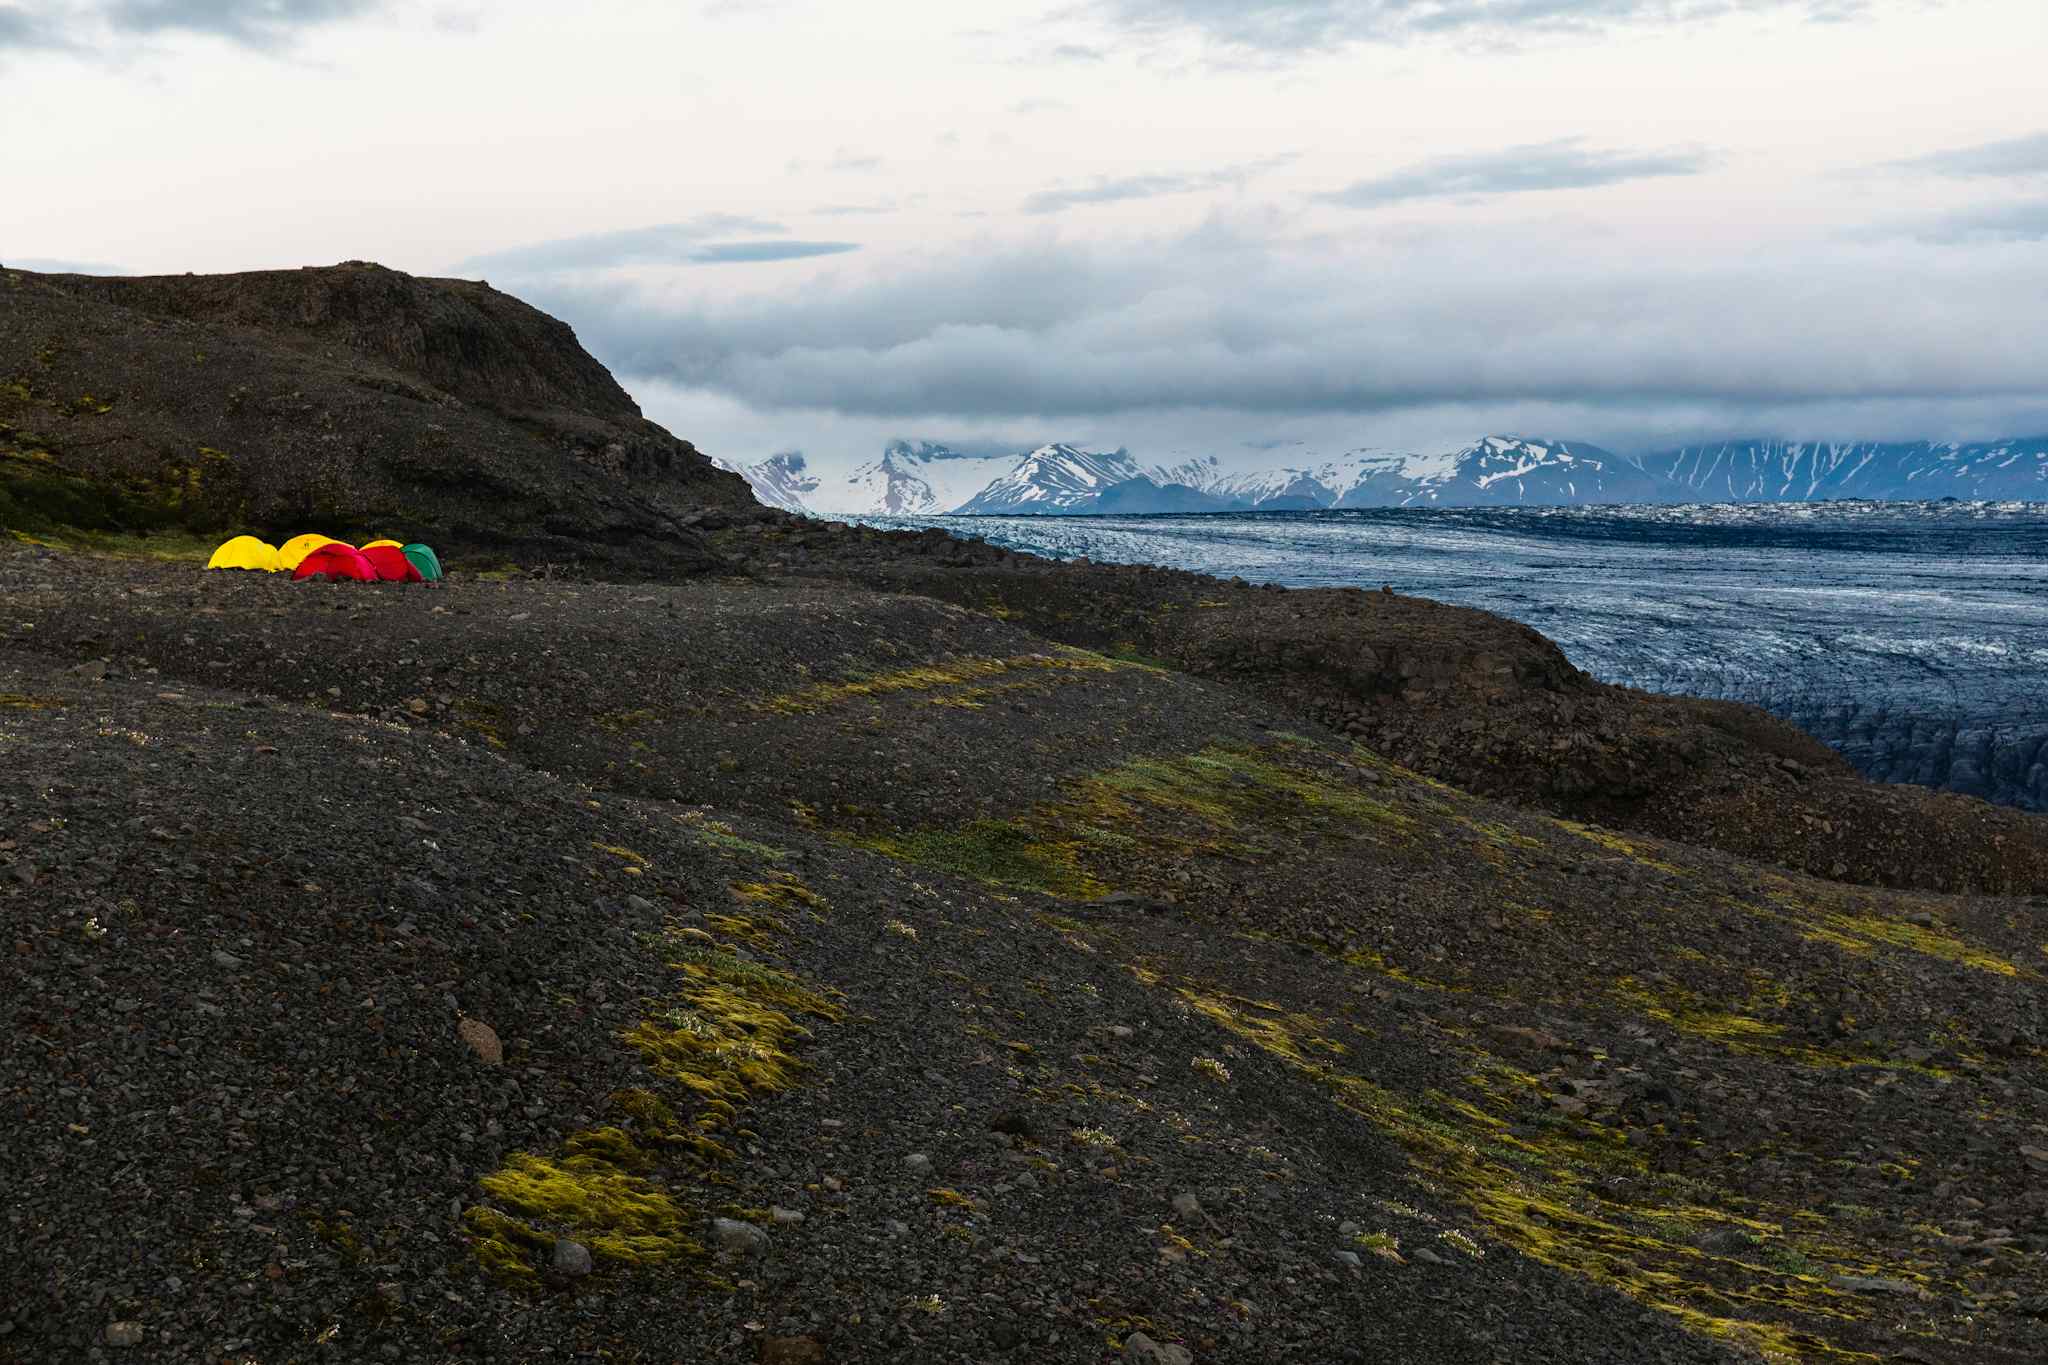 Wild camping near Skaftafell glacier, Iceland. Photo: Host/Icelandic Mountain Guide